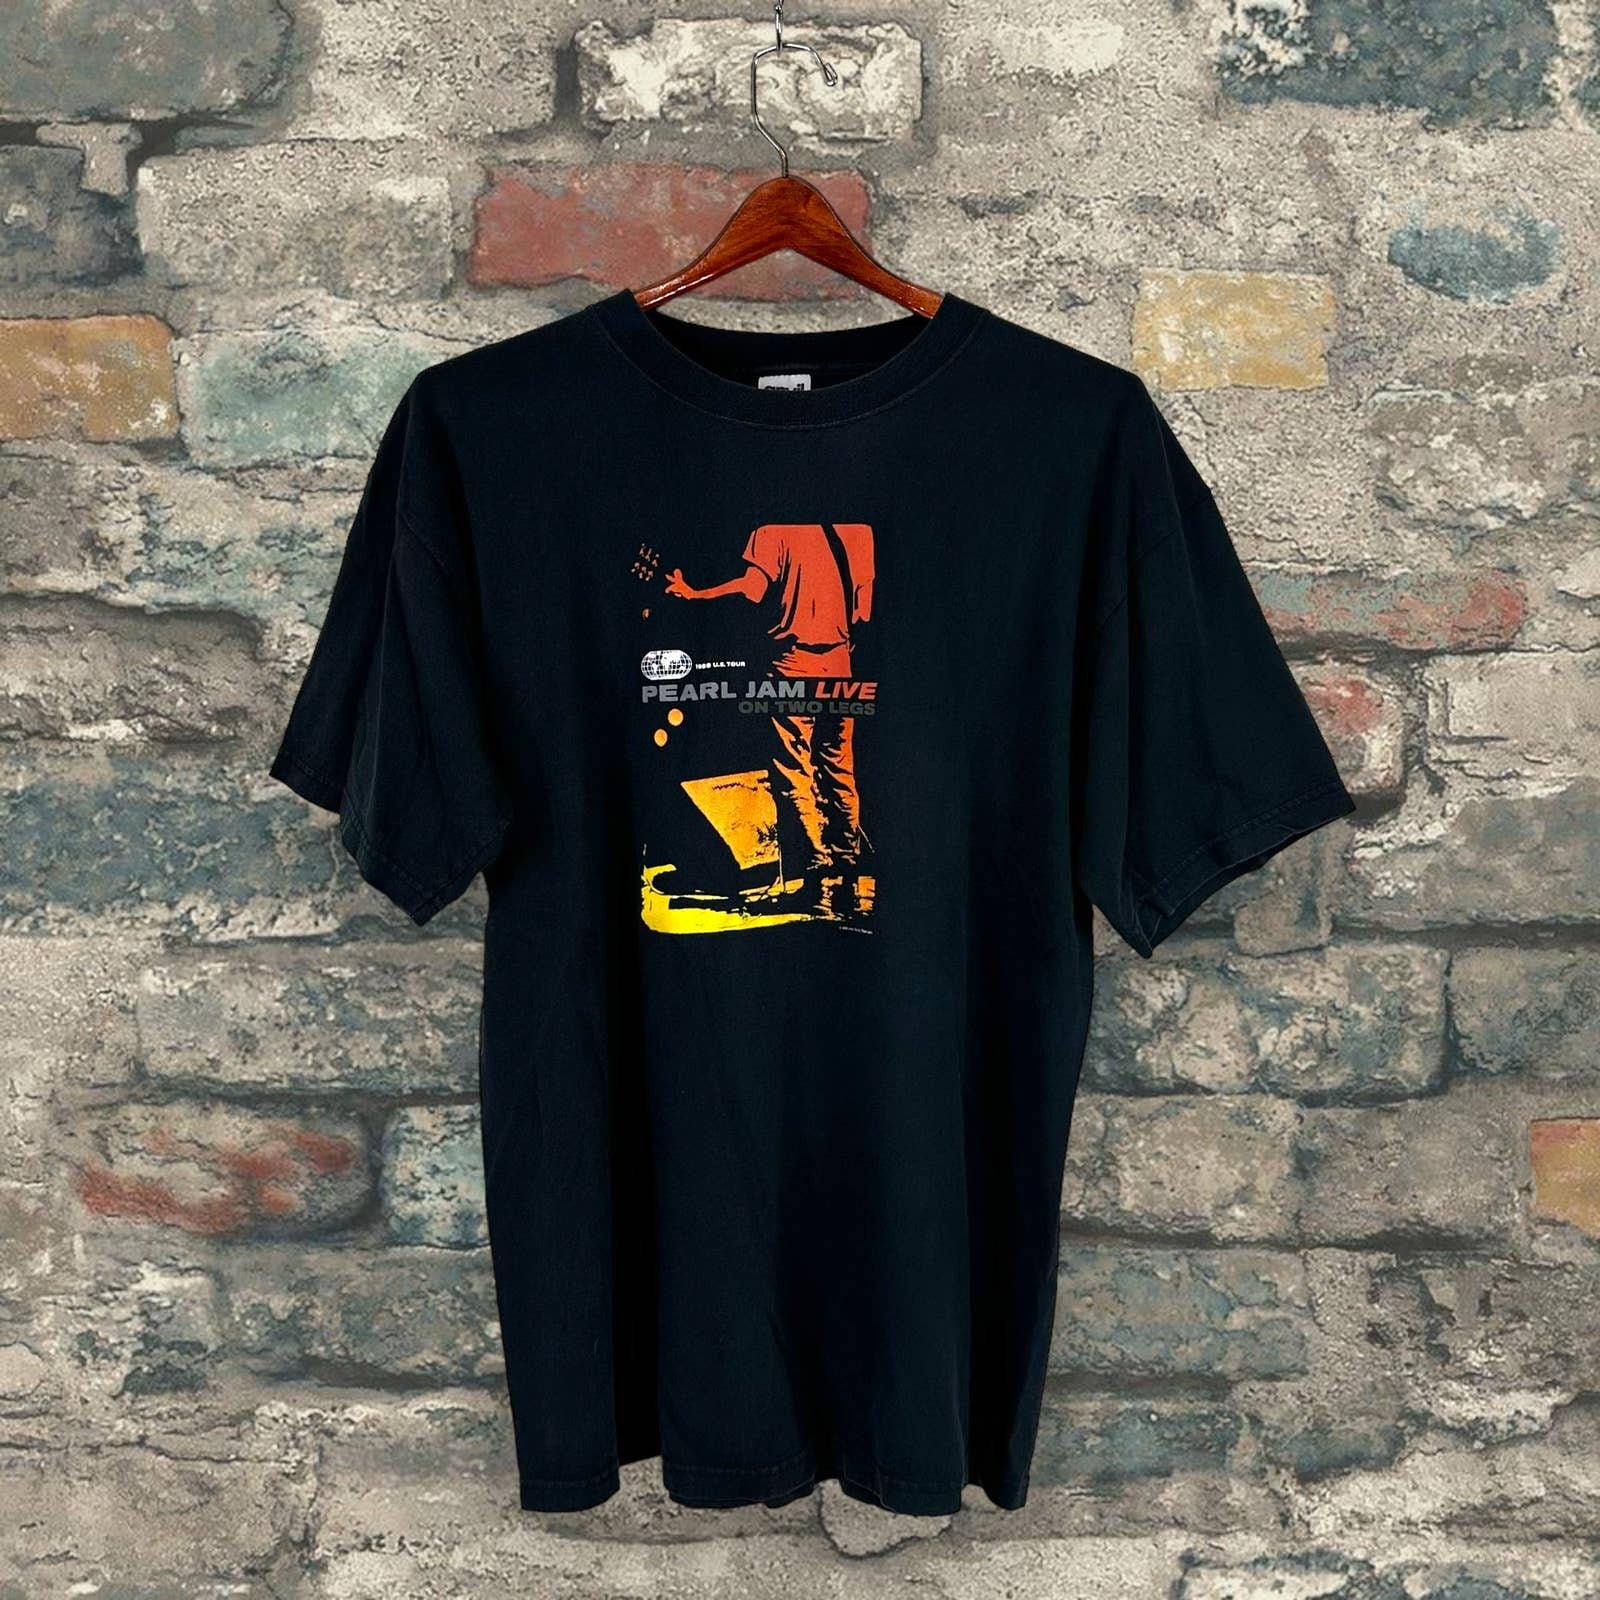 Vintage 1992 Pearl Jam Choices XL T Shirt Rare Kids Prefer Crayons To Guns